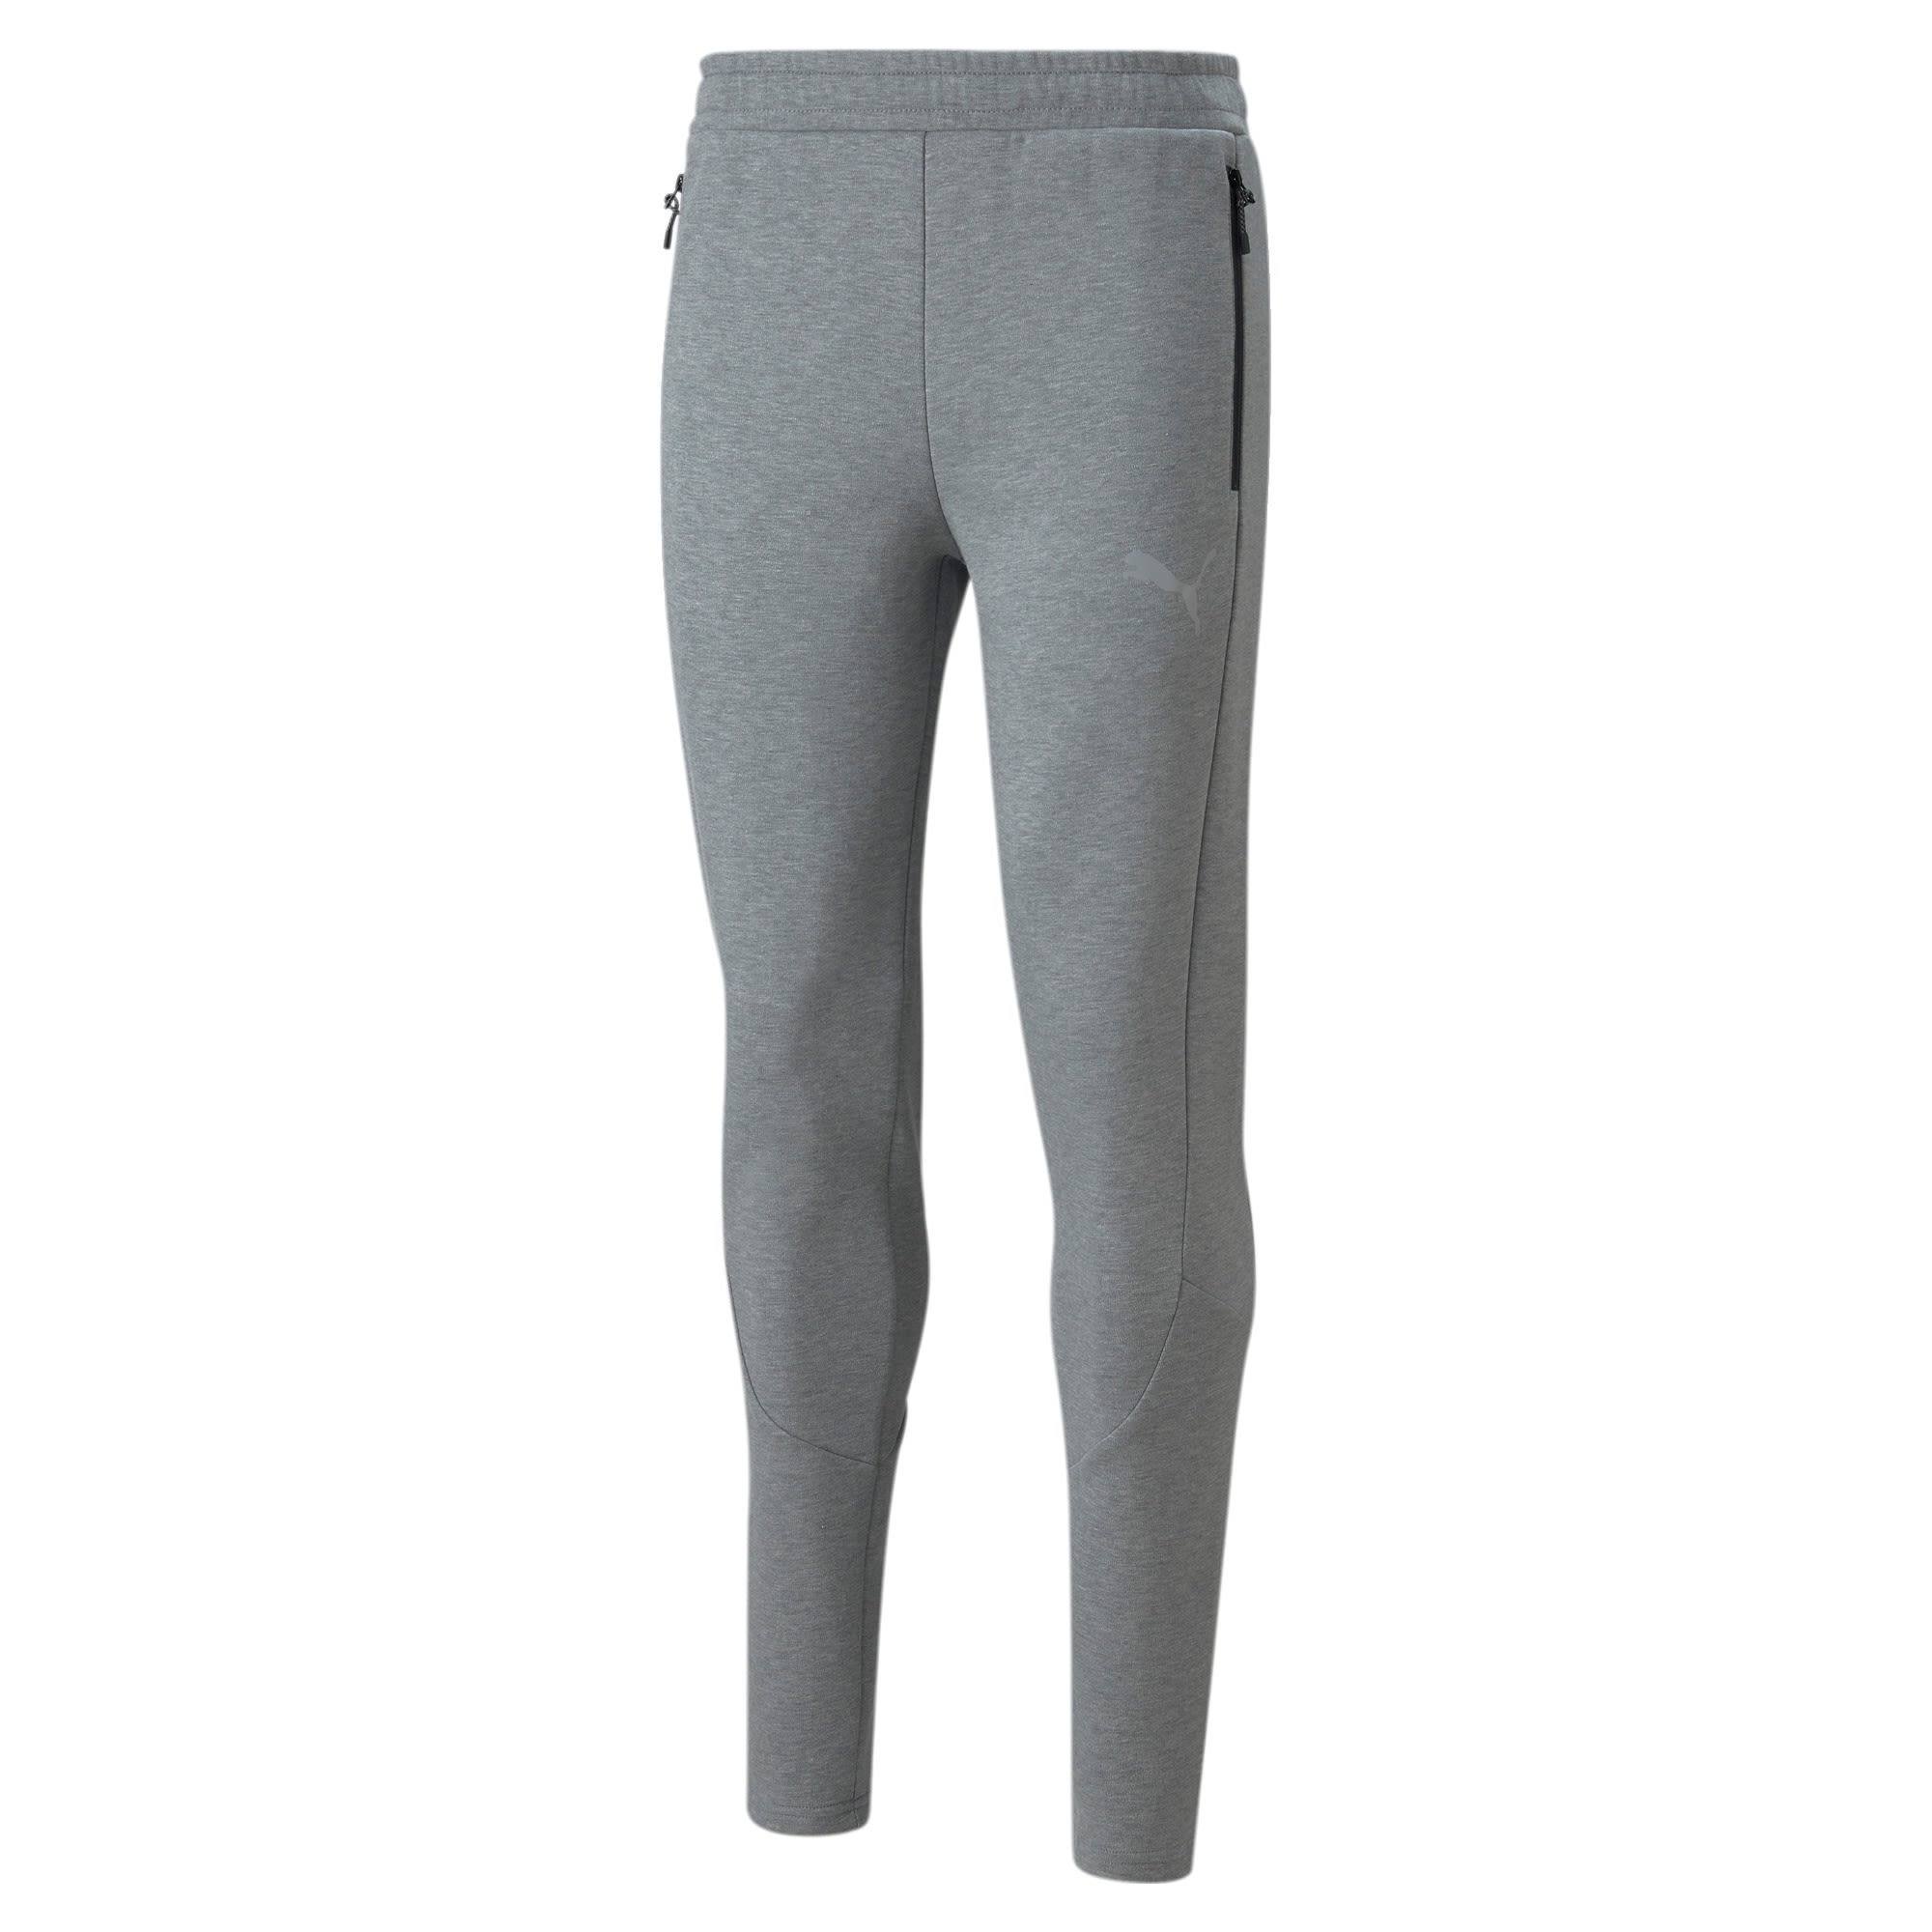 Puma Evostripe Pants Grau- Male Softshellhosen- Grsse L - Farbe Medium Gray Heather